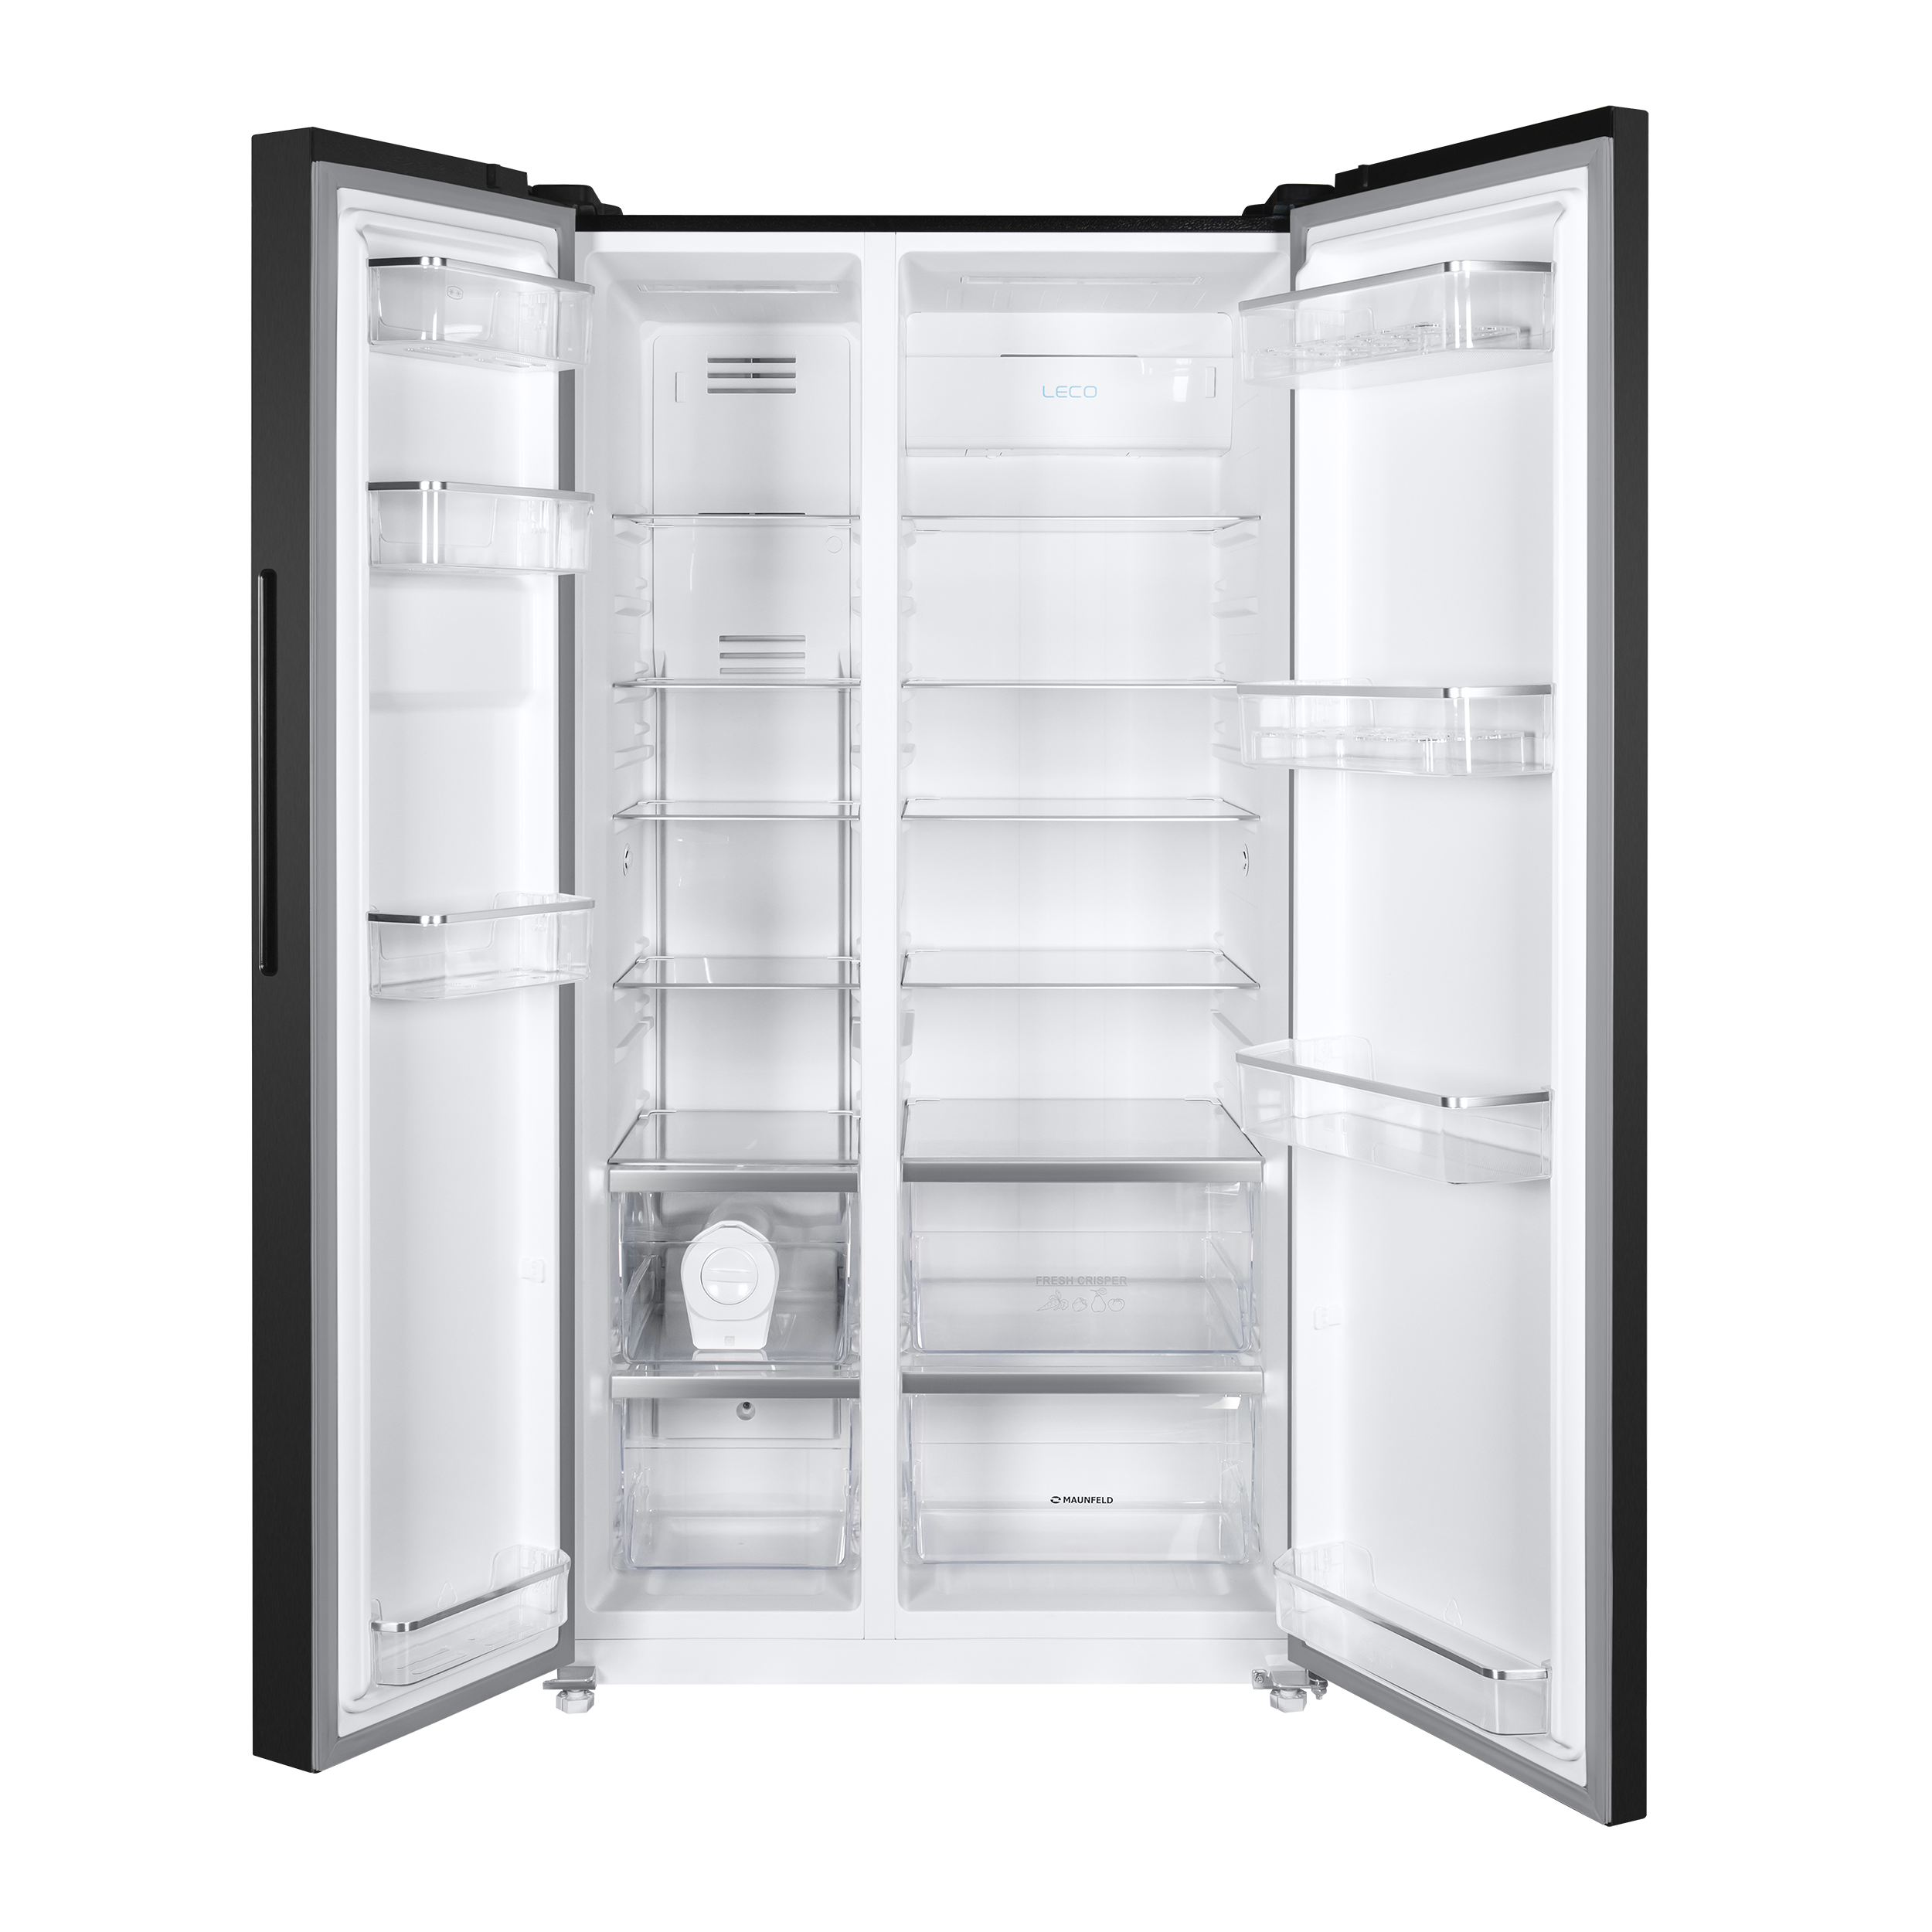 Холодильники ноу фрост фото. Холодильник Maunfeld mff177nfse. Холодильник Maunfeld 177nfb. Холодильник Maunfeld mff200nfse. Холодильник Maunfeld mff1857nfsb.